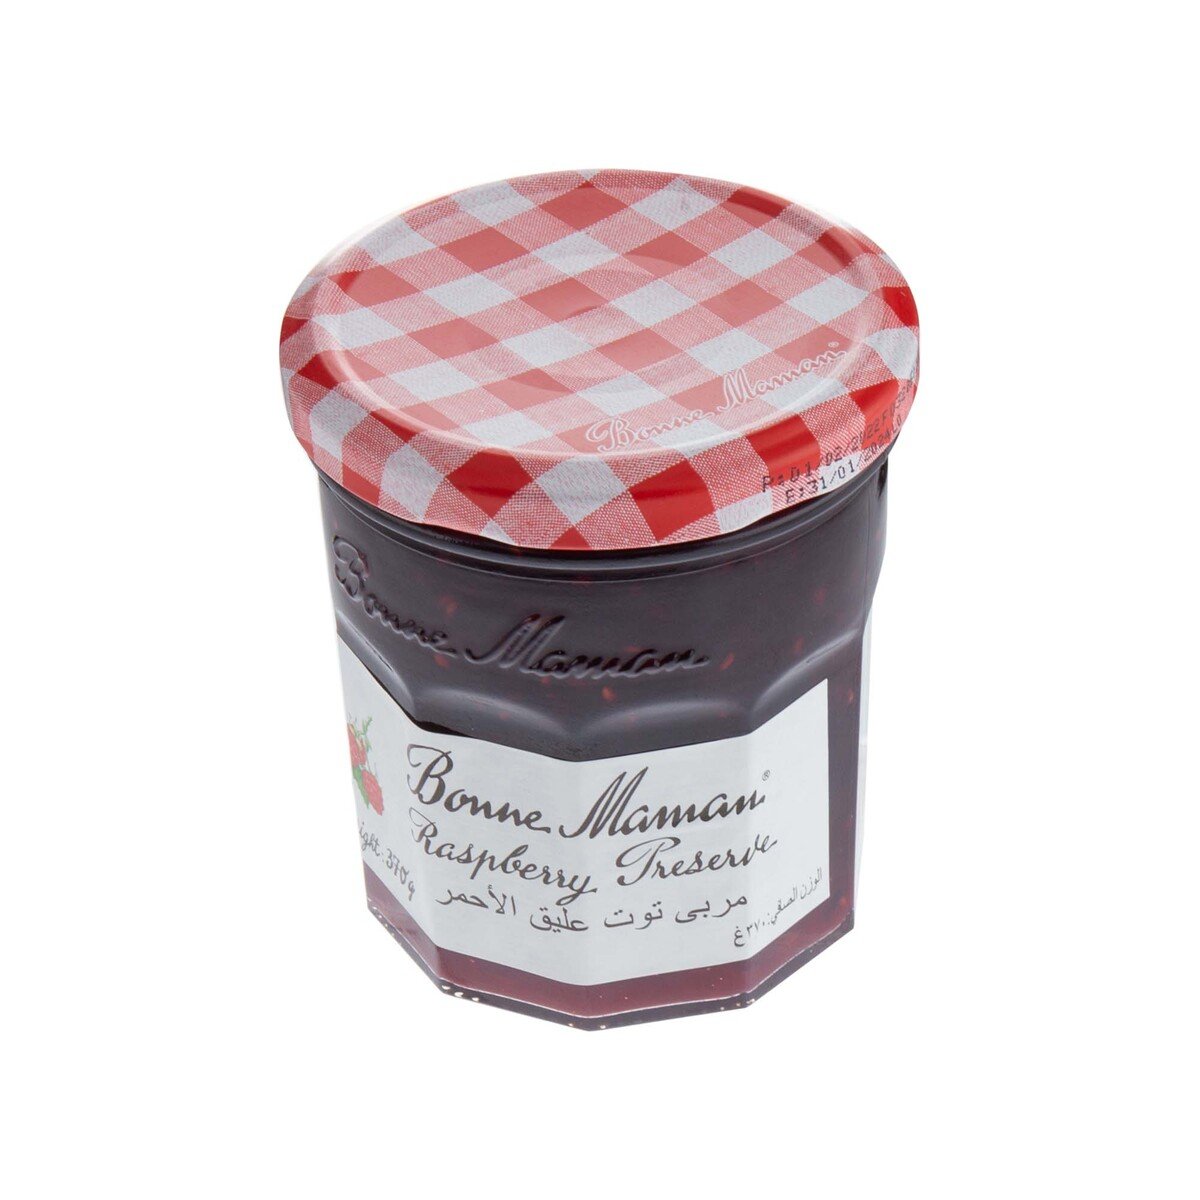 Blueberry Preserves “Bonne Maman” 370g - LAUBRY - Finest Foods